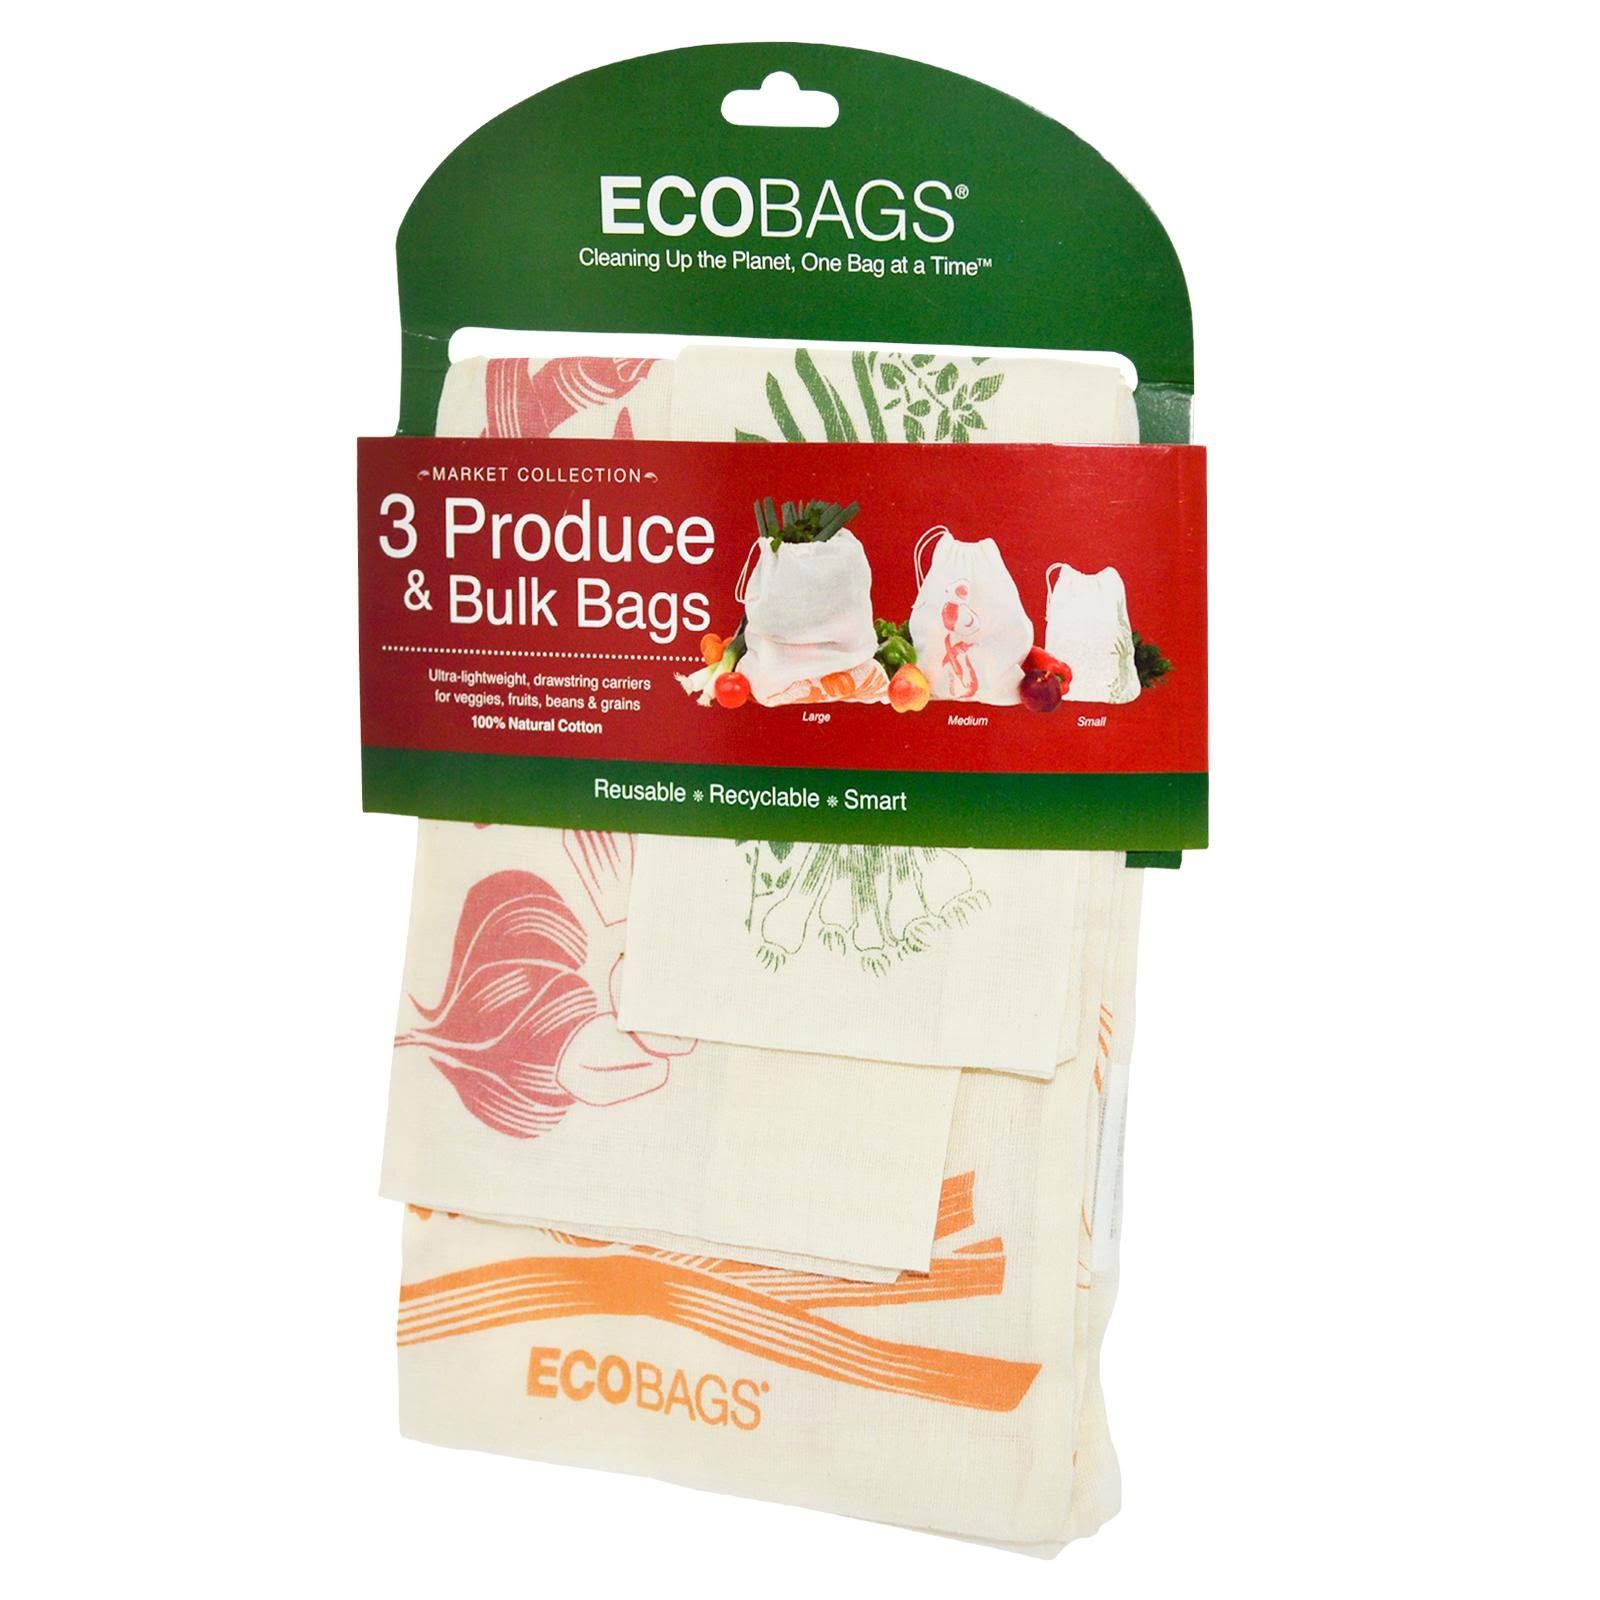 Eco-Bags Produce and Bulk Bags - 3 Produce and Bulk Bags